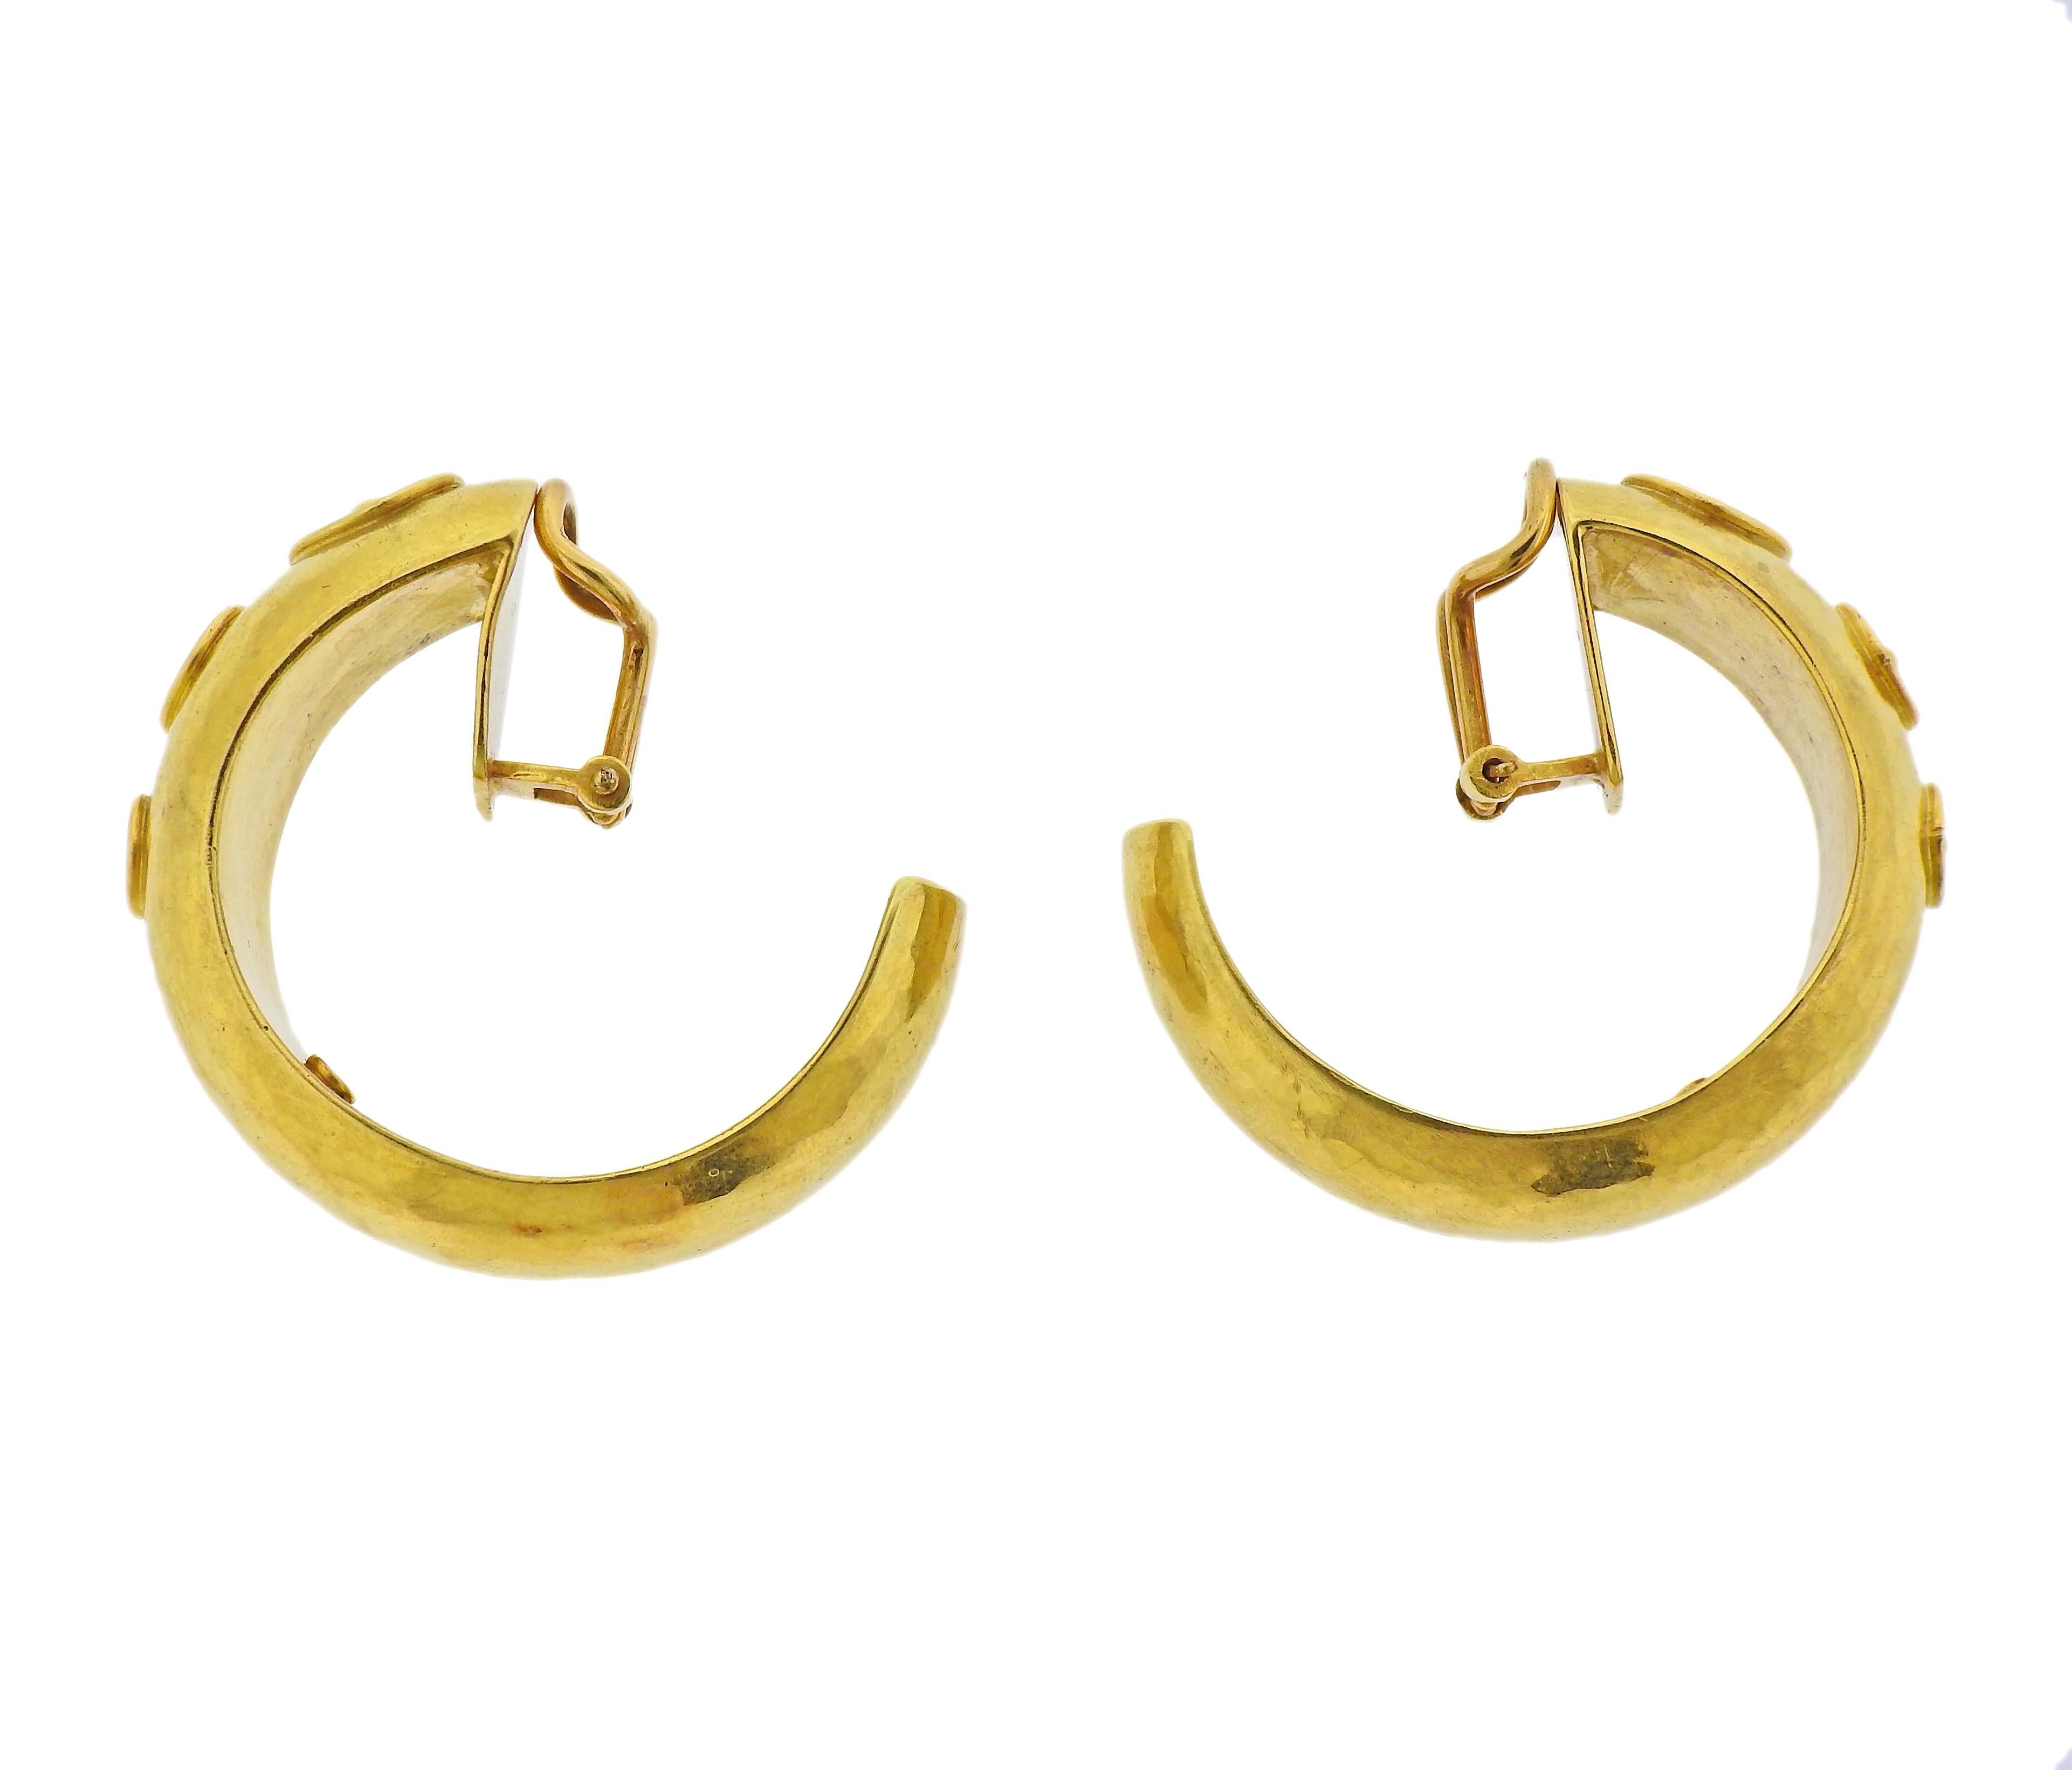 Pair of large 18k yellow gold hoop earrings. Earrings are 36mm in diameter x 15mm wide. Marked: 750. Weight - 25.9 grams. 